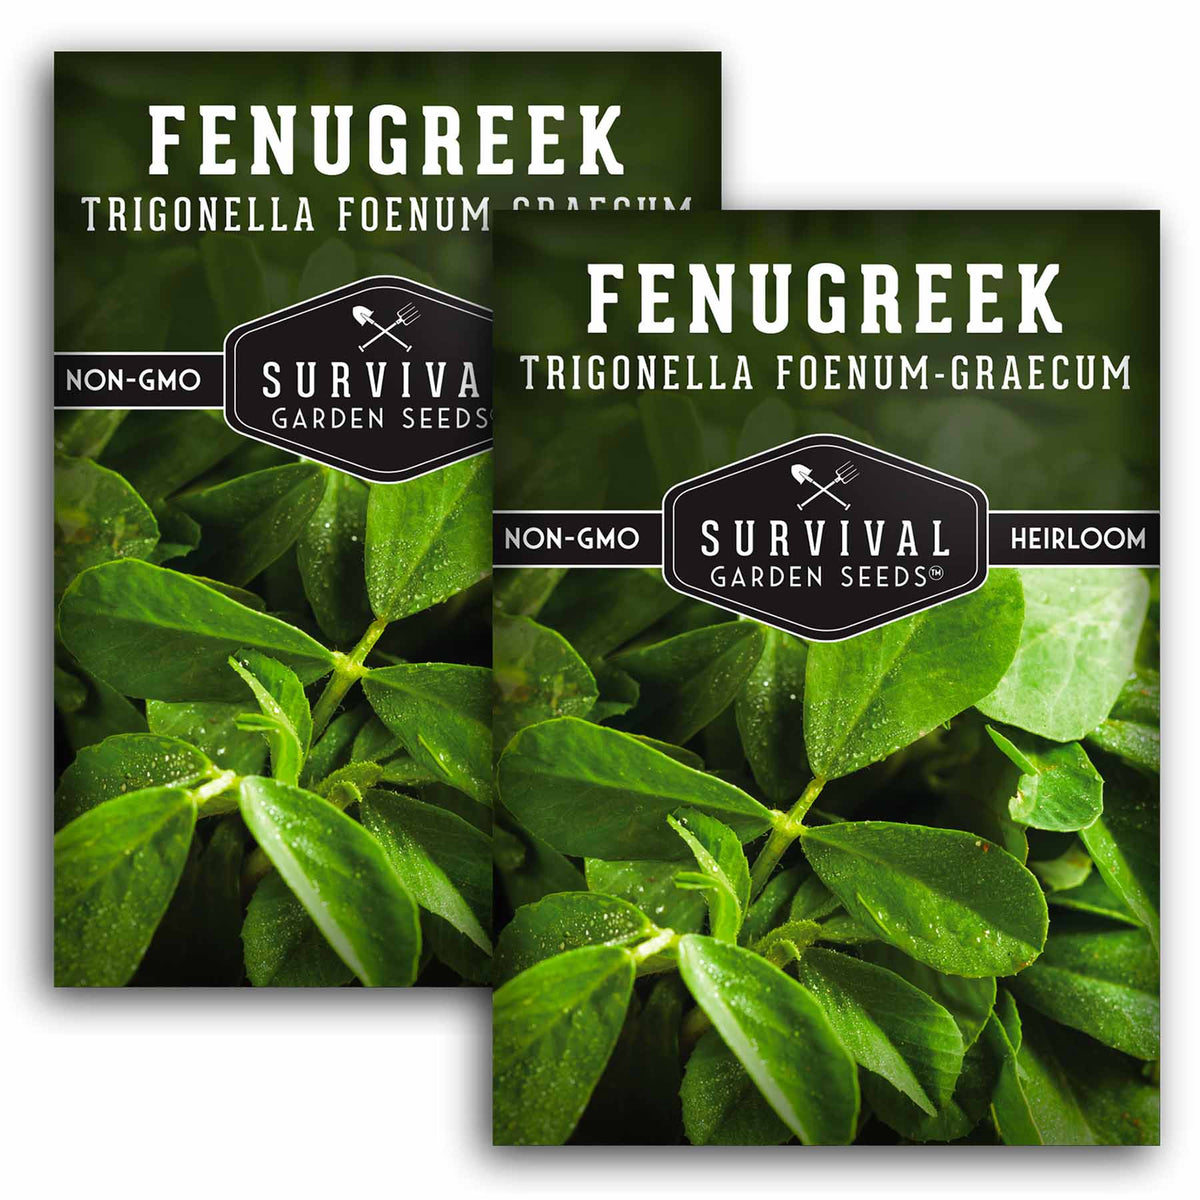 2 packets of Fenugreek seeds